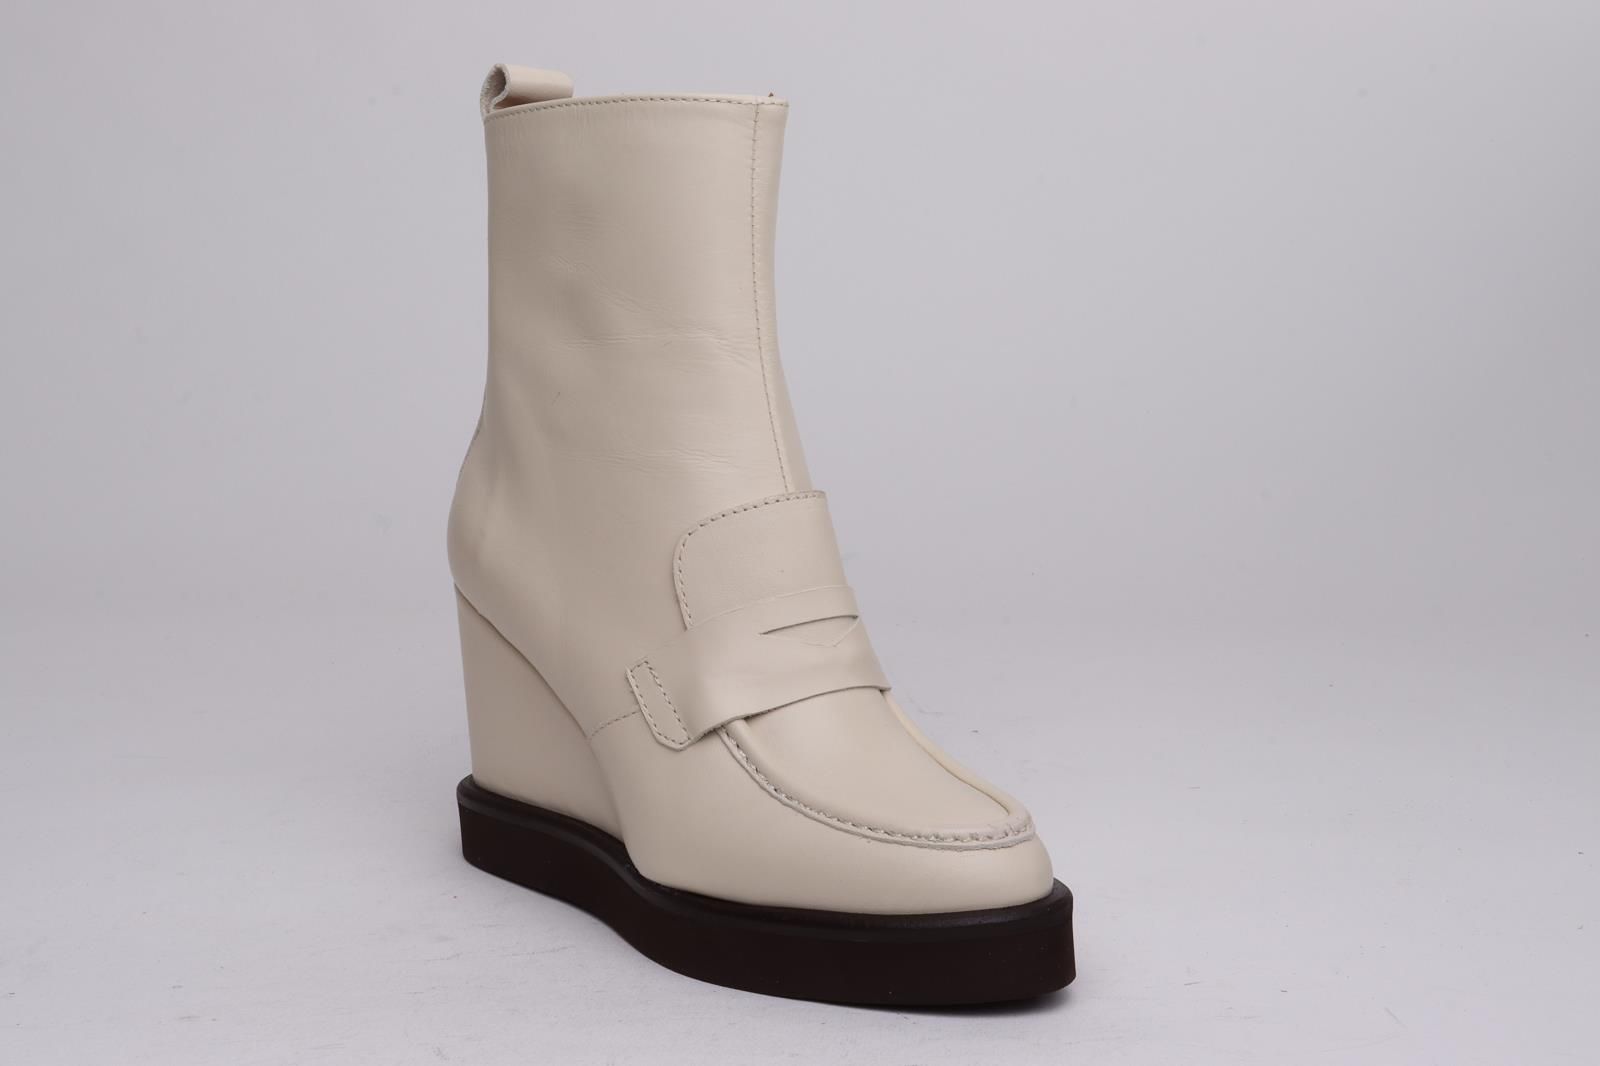 Catwalk Black High Heels Boots 37 | eBay